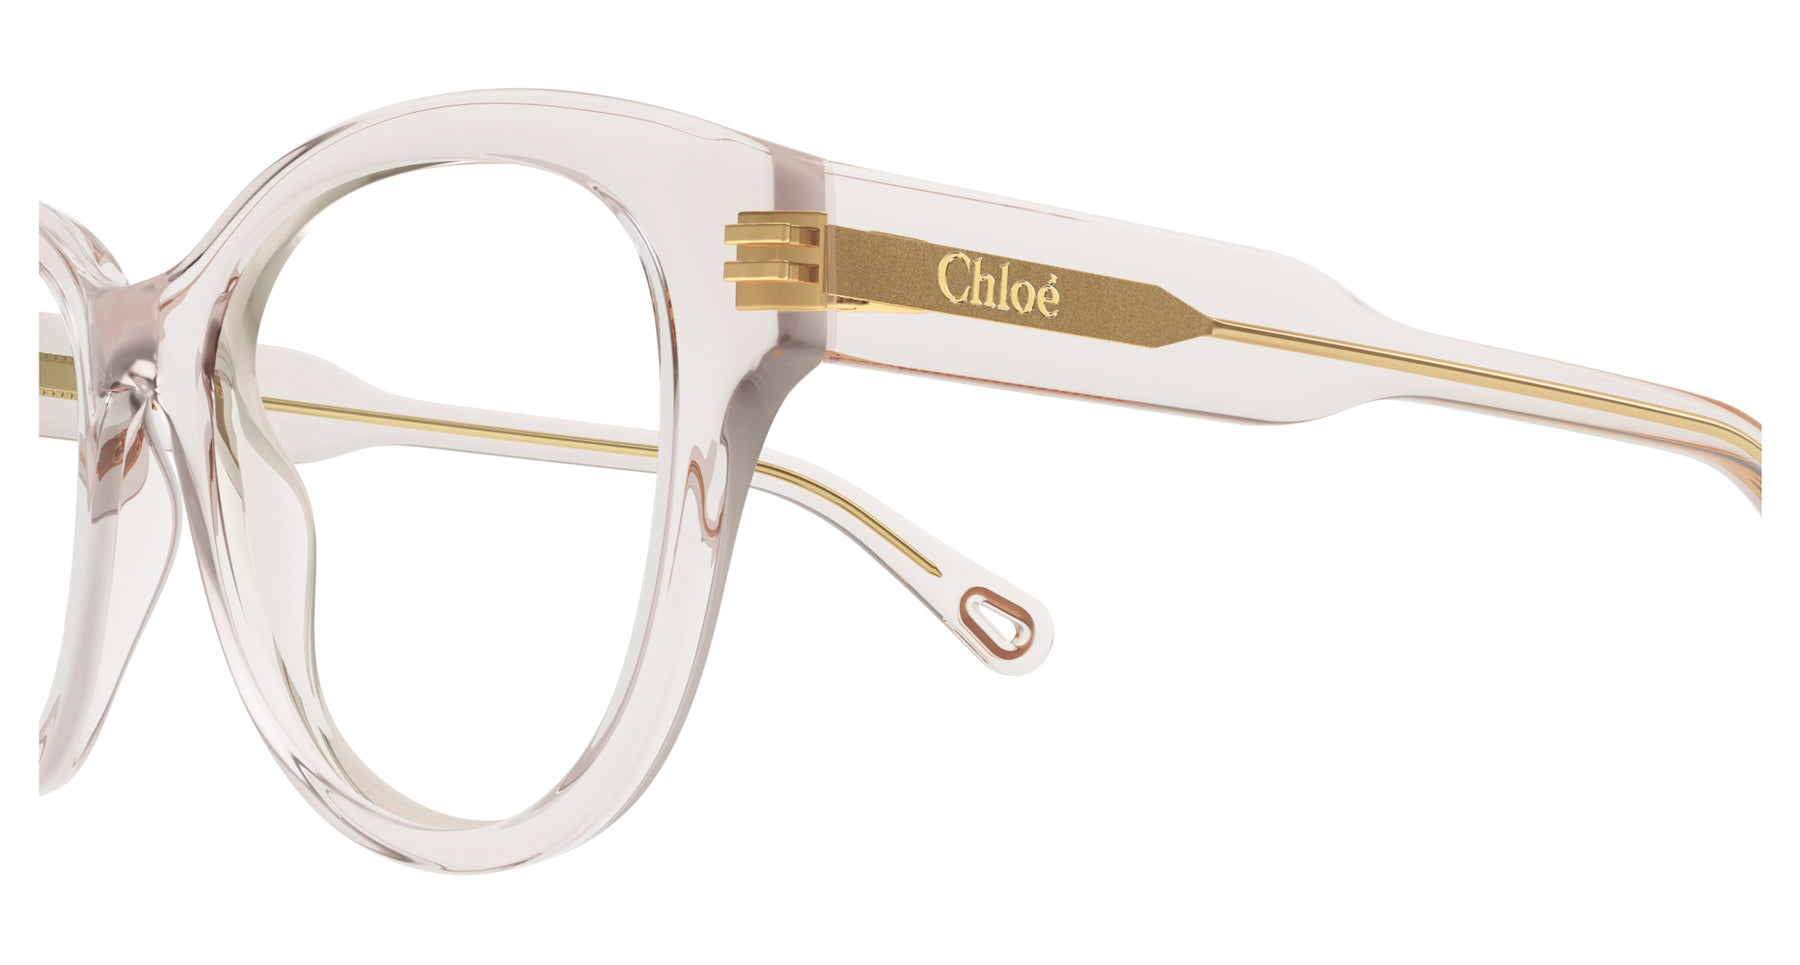 Chloe Glasses Chain Gold – The Bias Cut